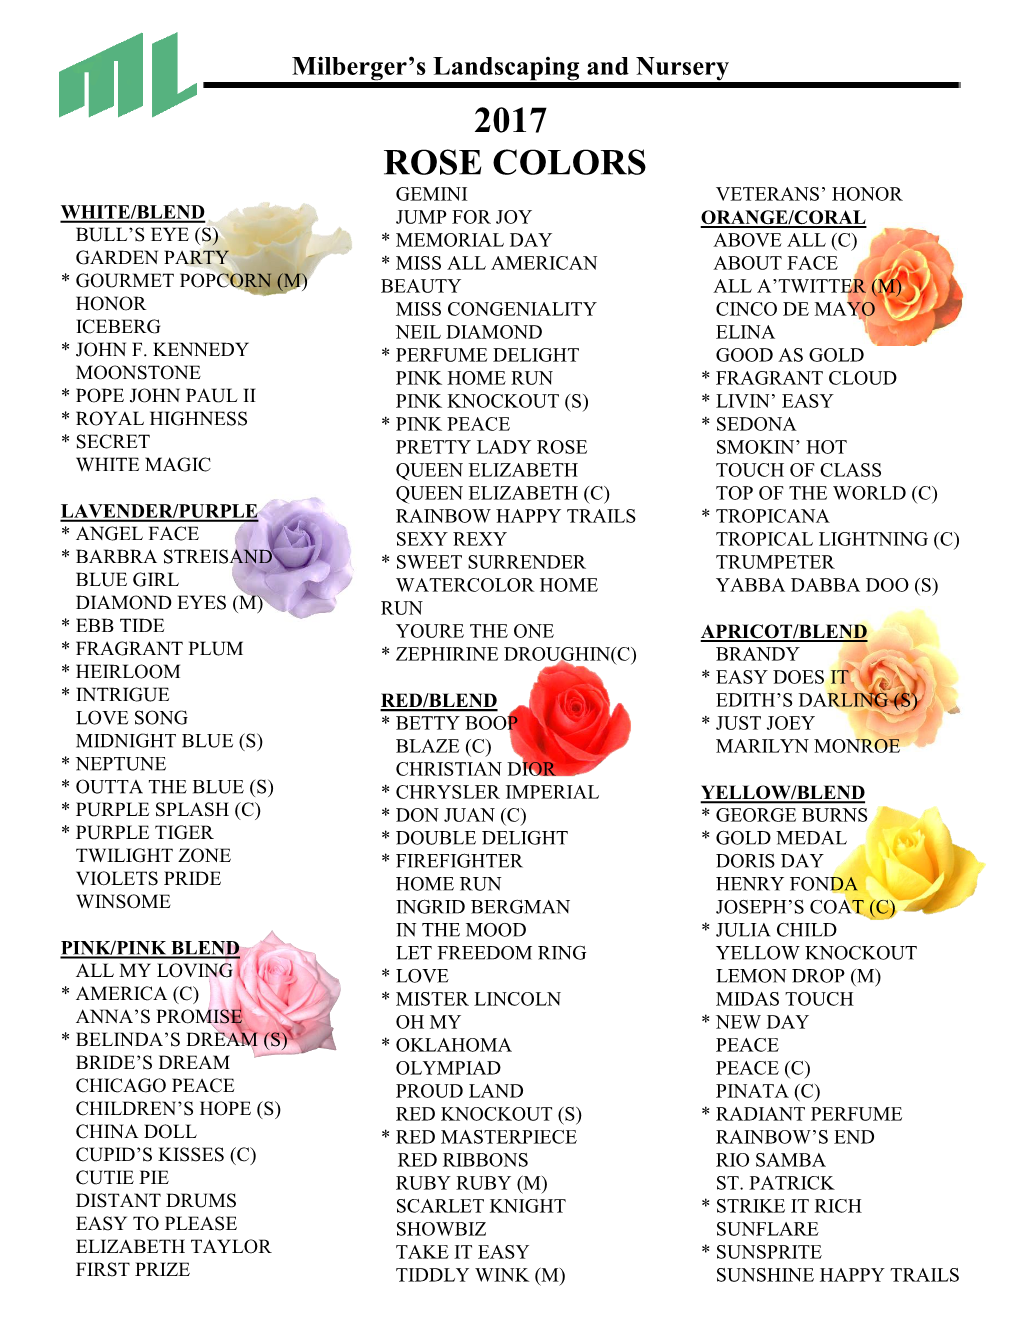 2017 Rose Colors